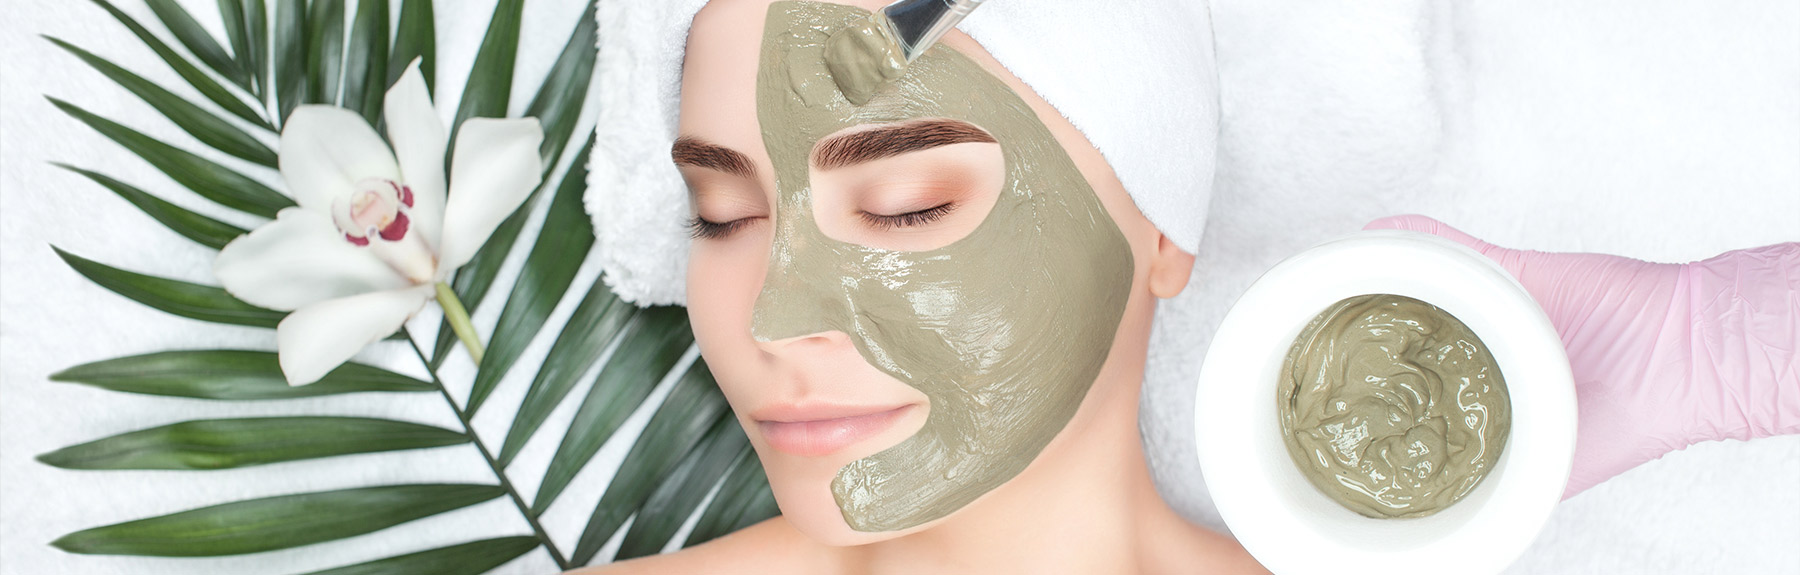 facials and skin treatments